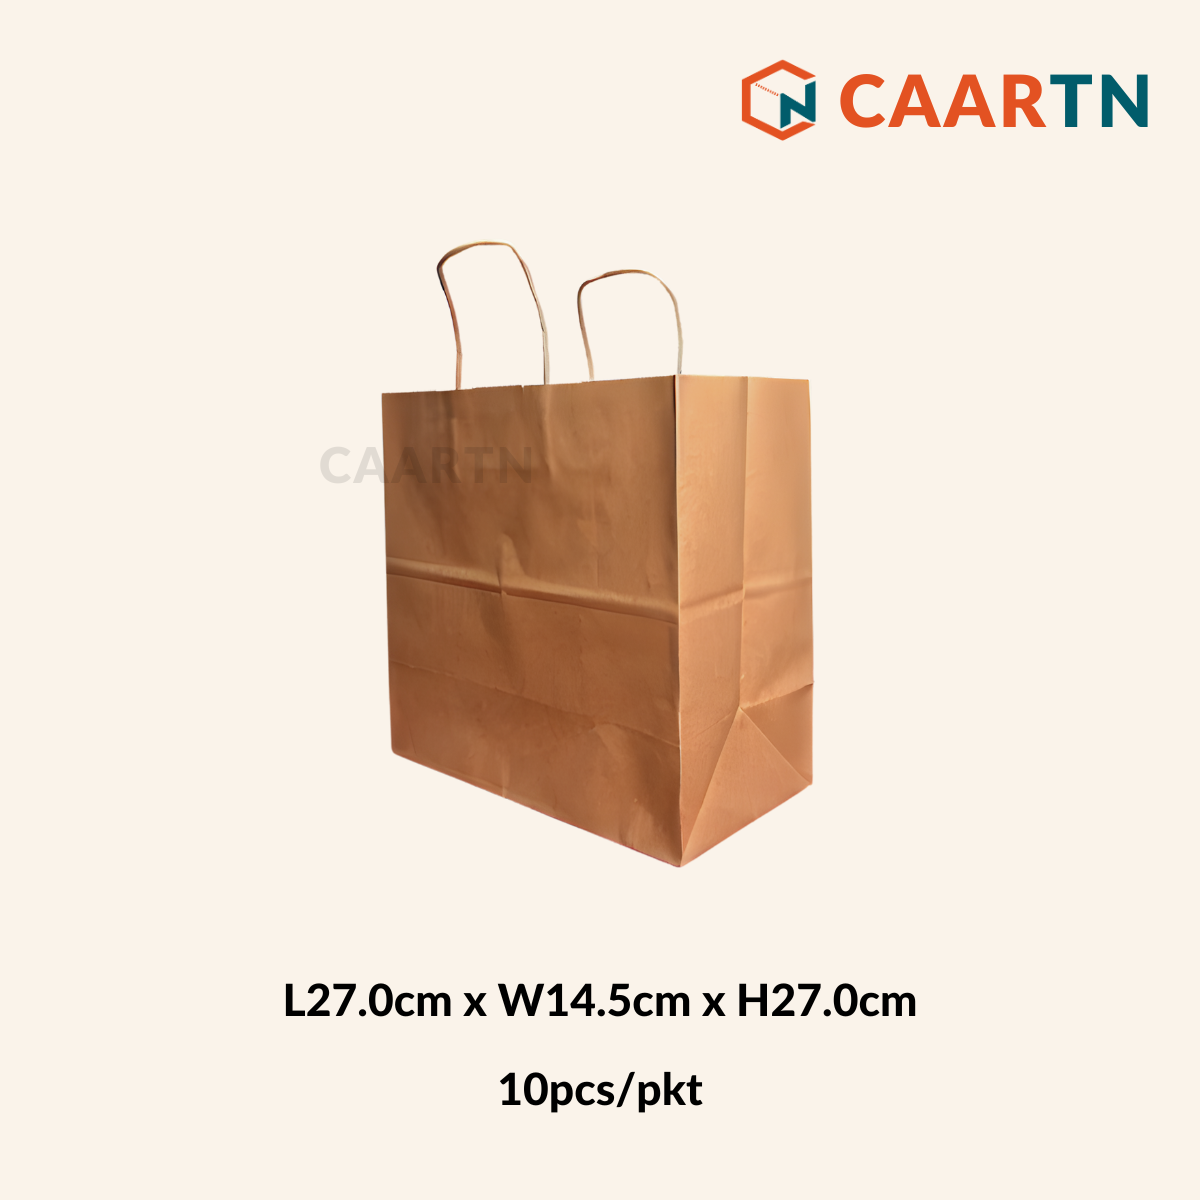 130GSM Kraft Paper Bag (27cm x 14.5cm x 27cm)